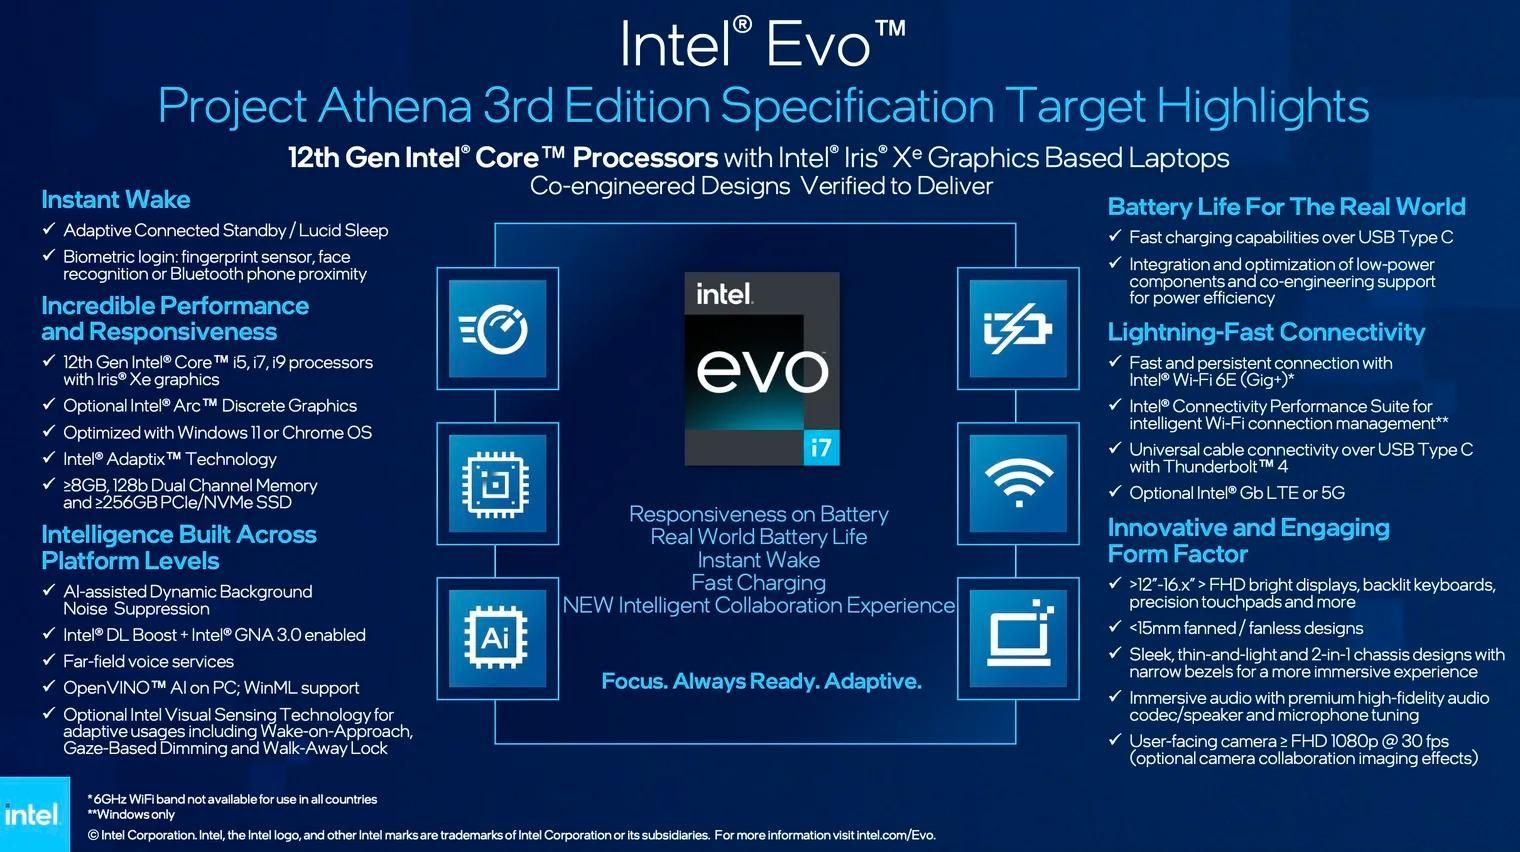 Intel Evo 3 certification